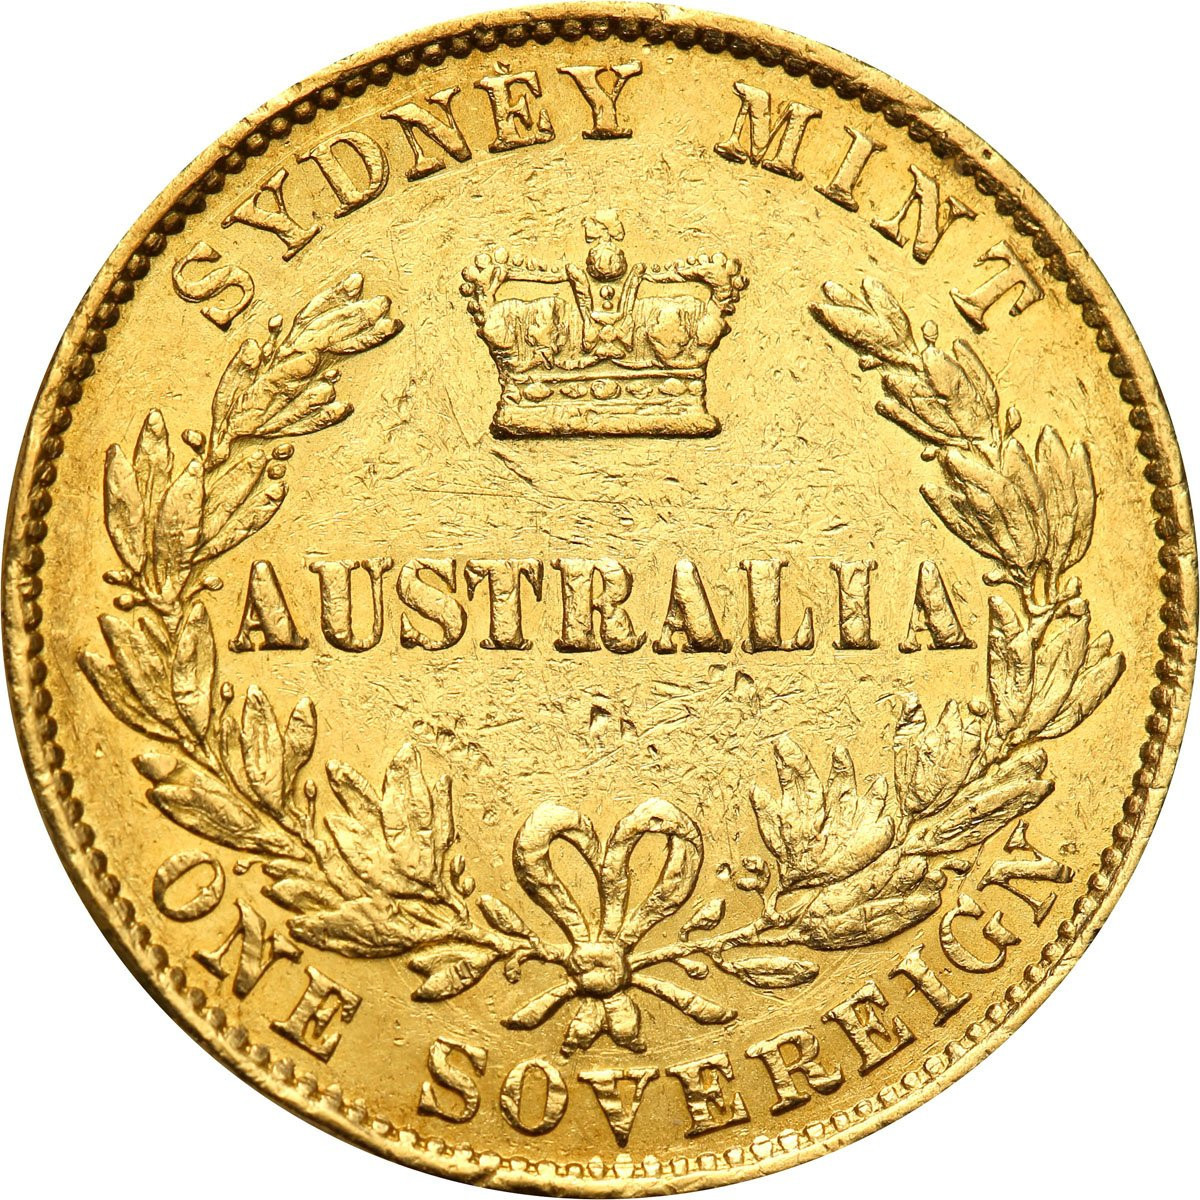 Australia. Victoria Suweren 1864, Sydney – rzadki